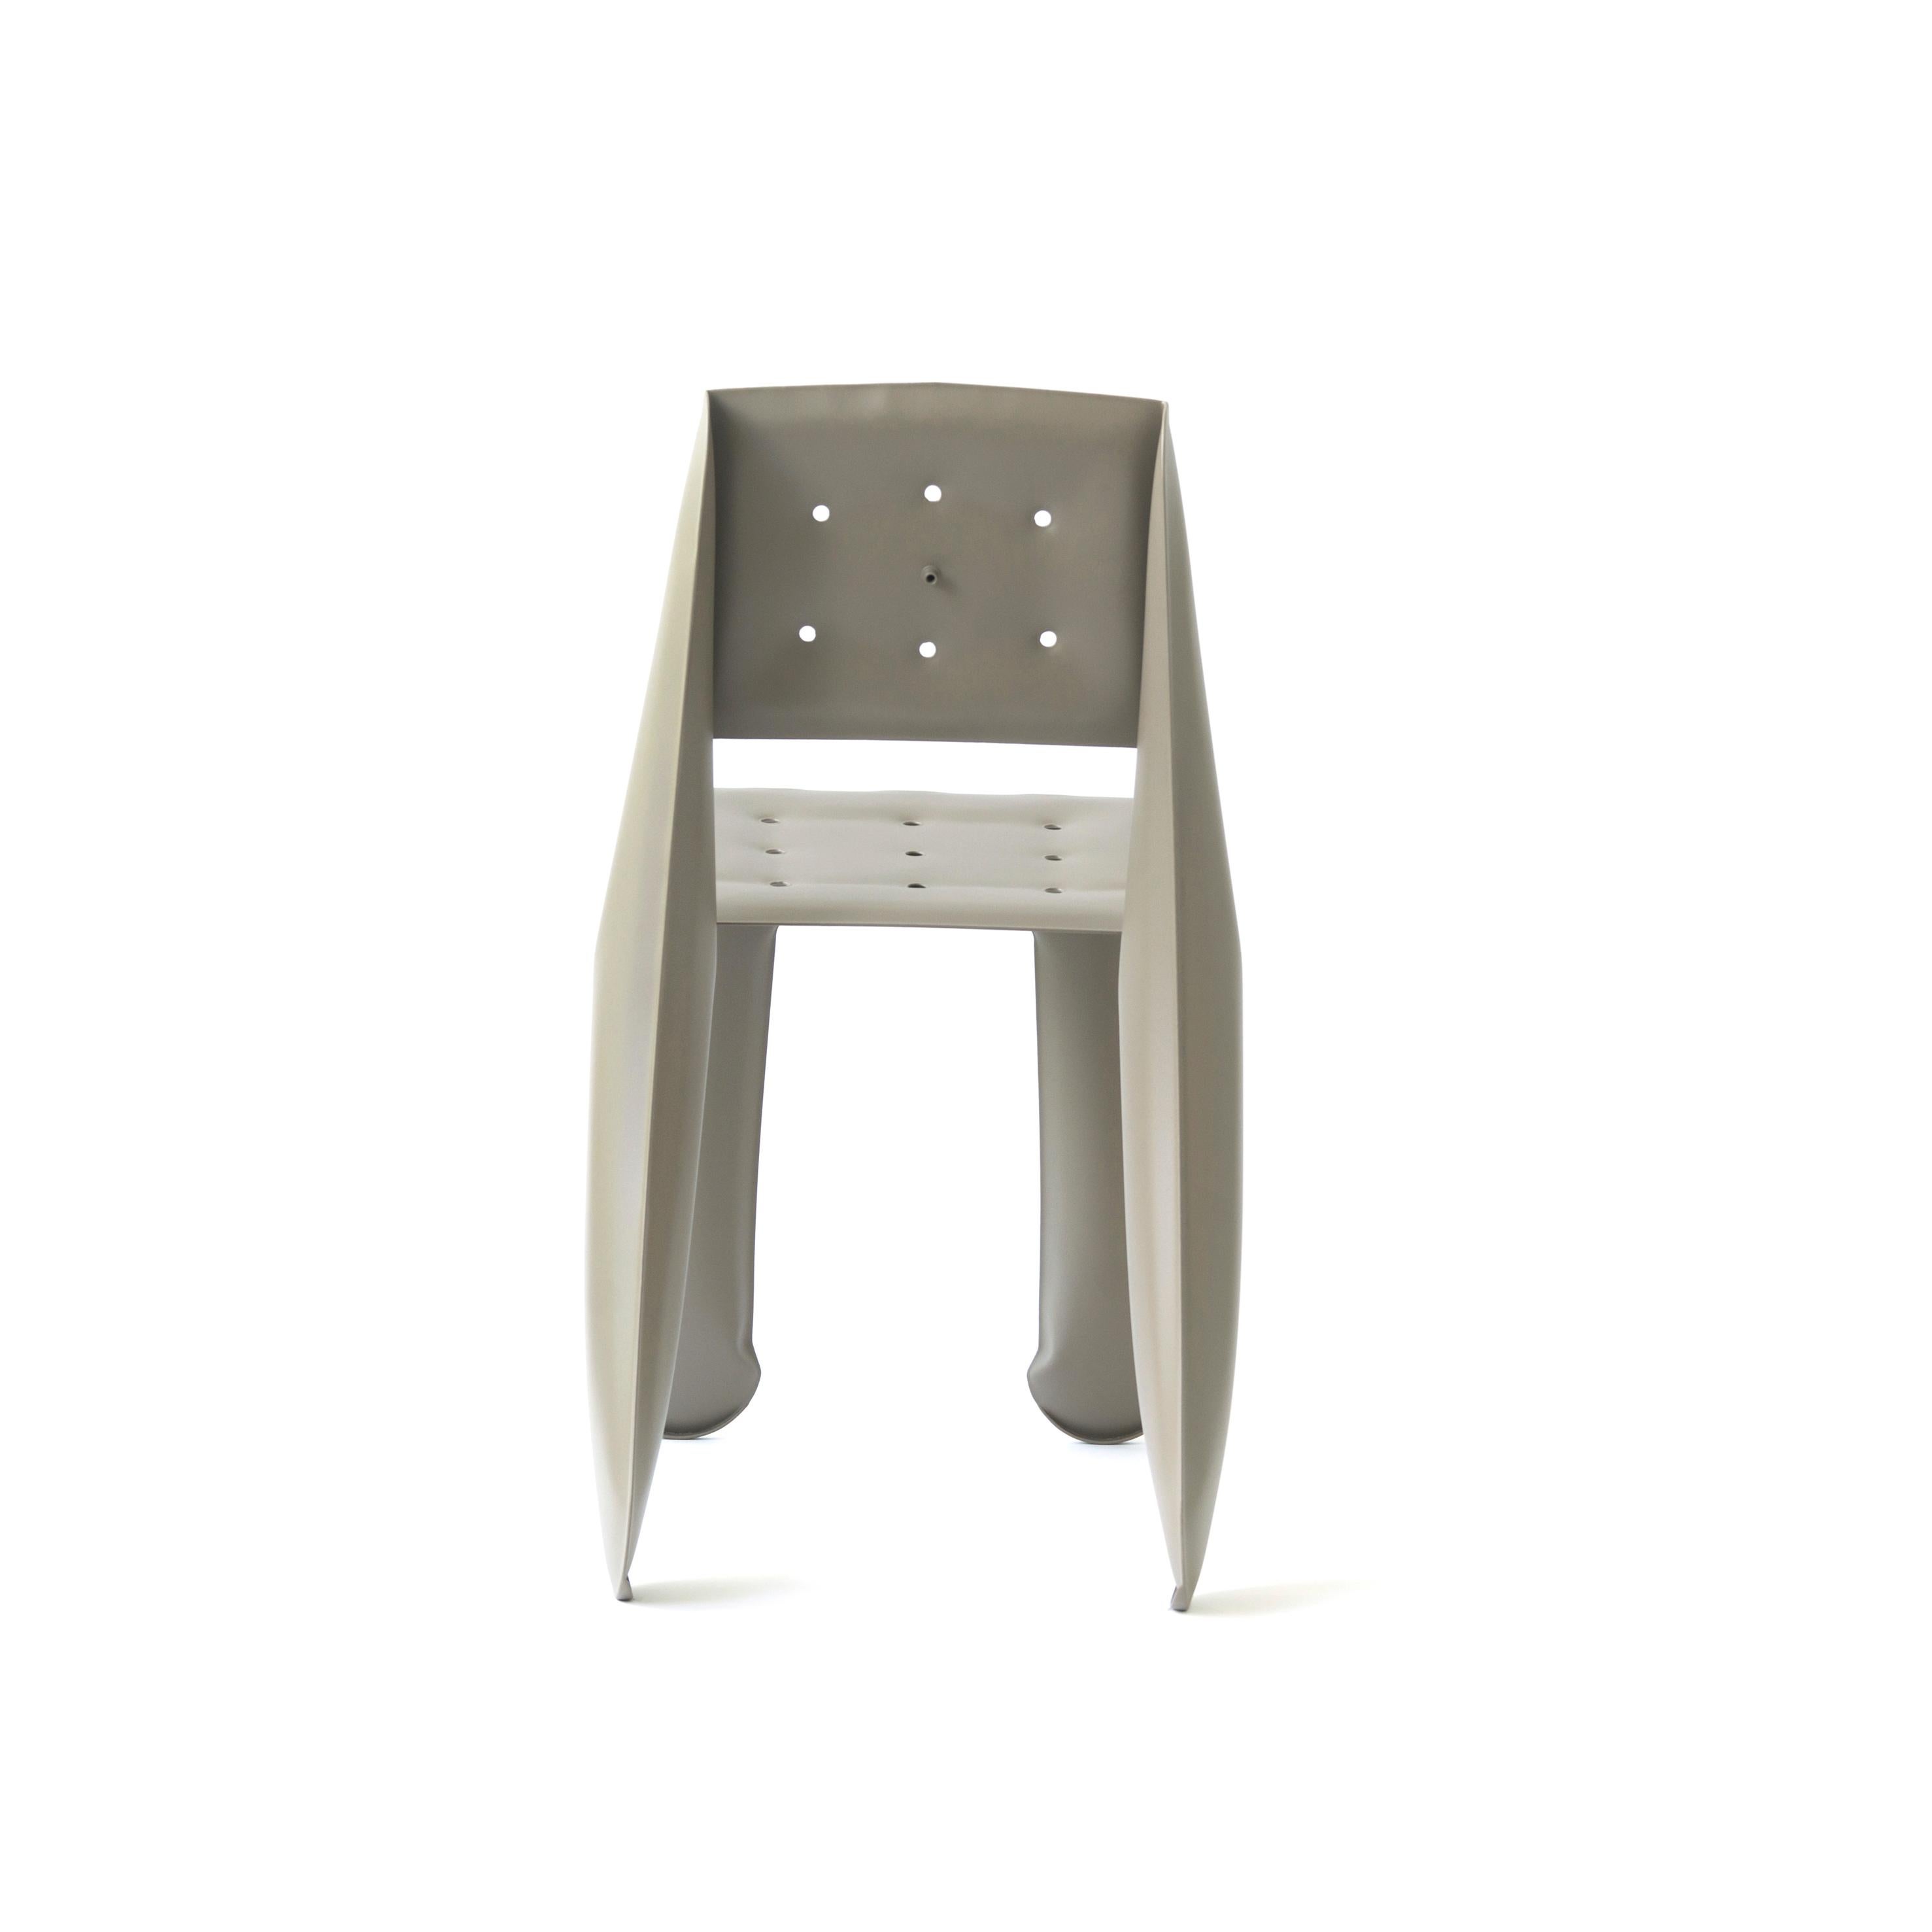 Powder-Coated Beige Carbon Steel Chippensteel 0.5 Sculptural Chair by Zieta For Sale